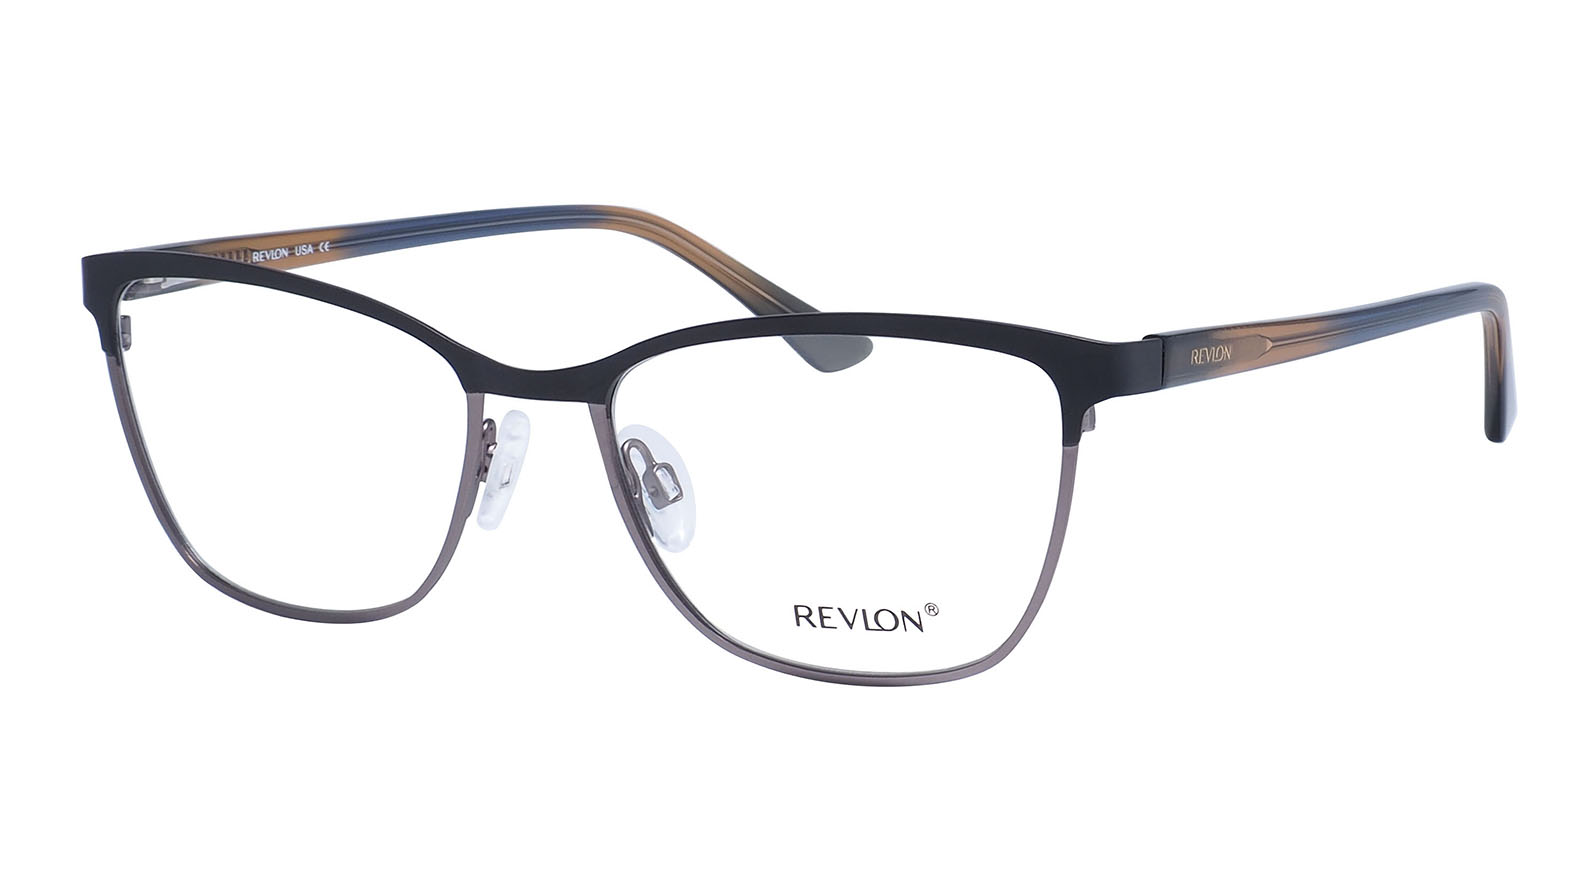 Revlon 1830 07